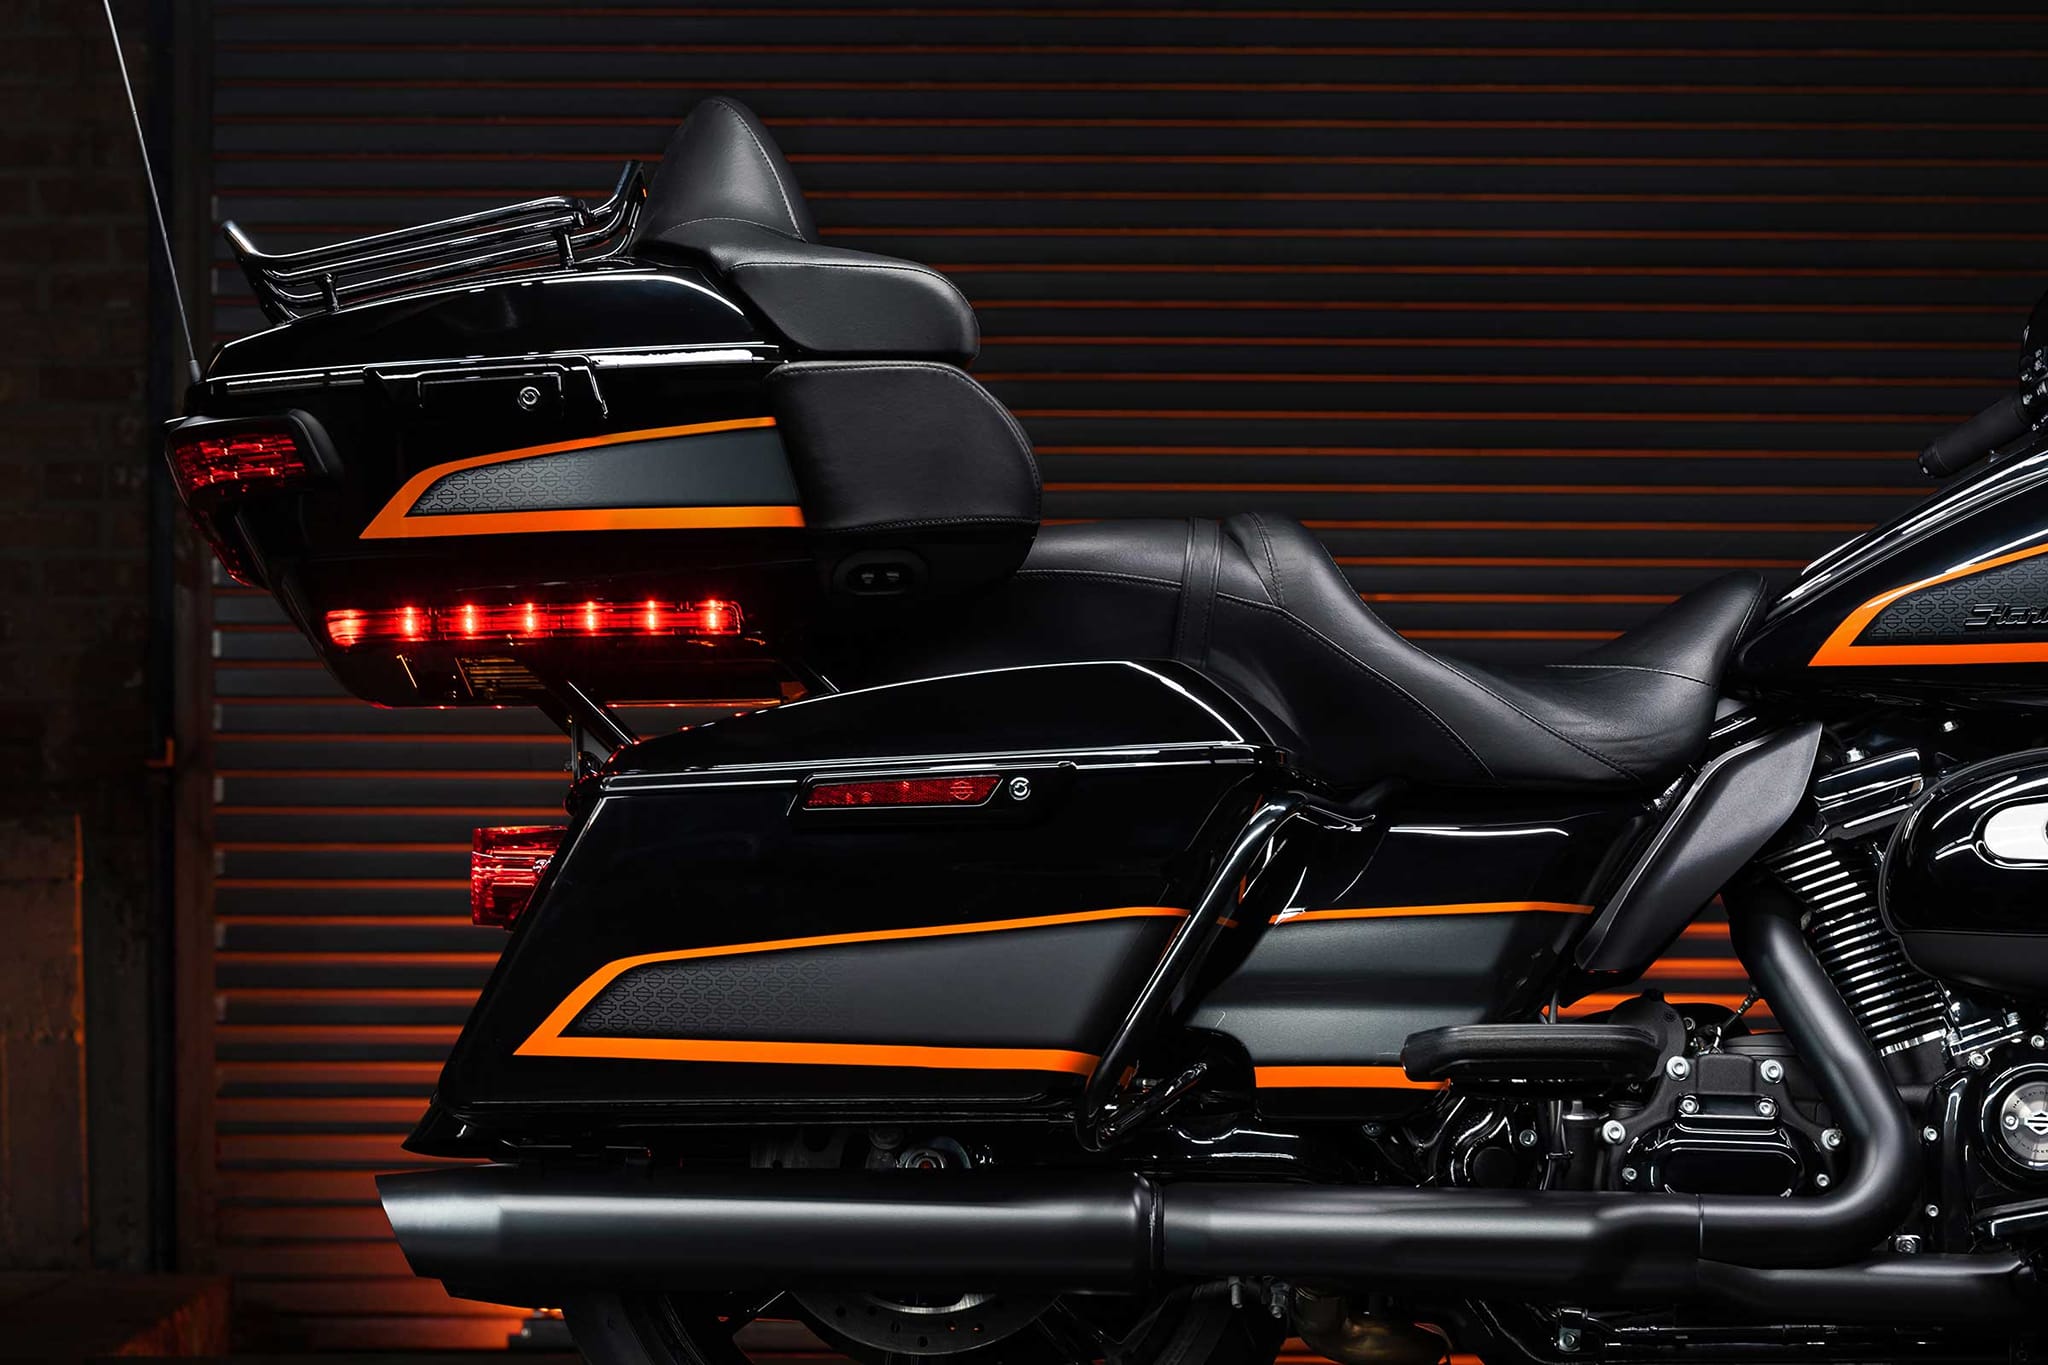 2022 Harley-Davidson Apex